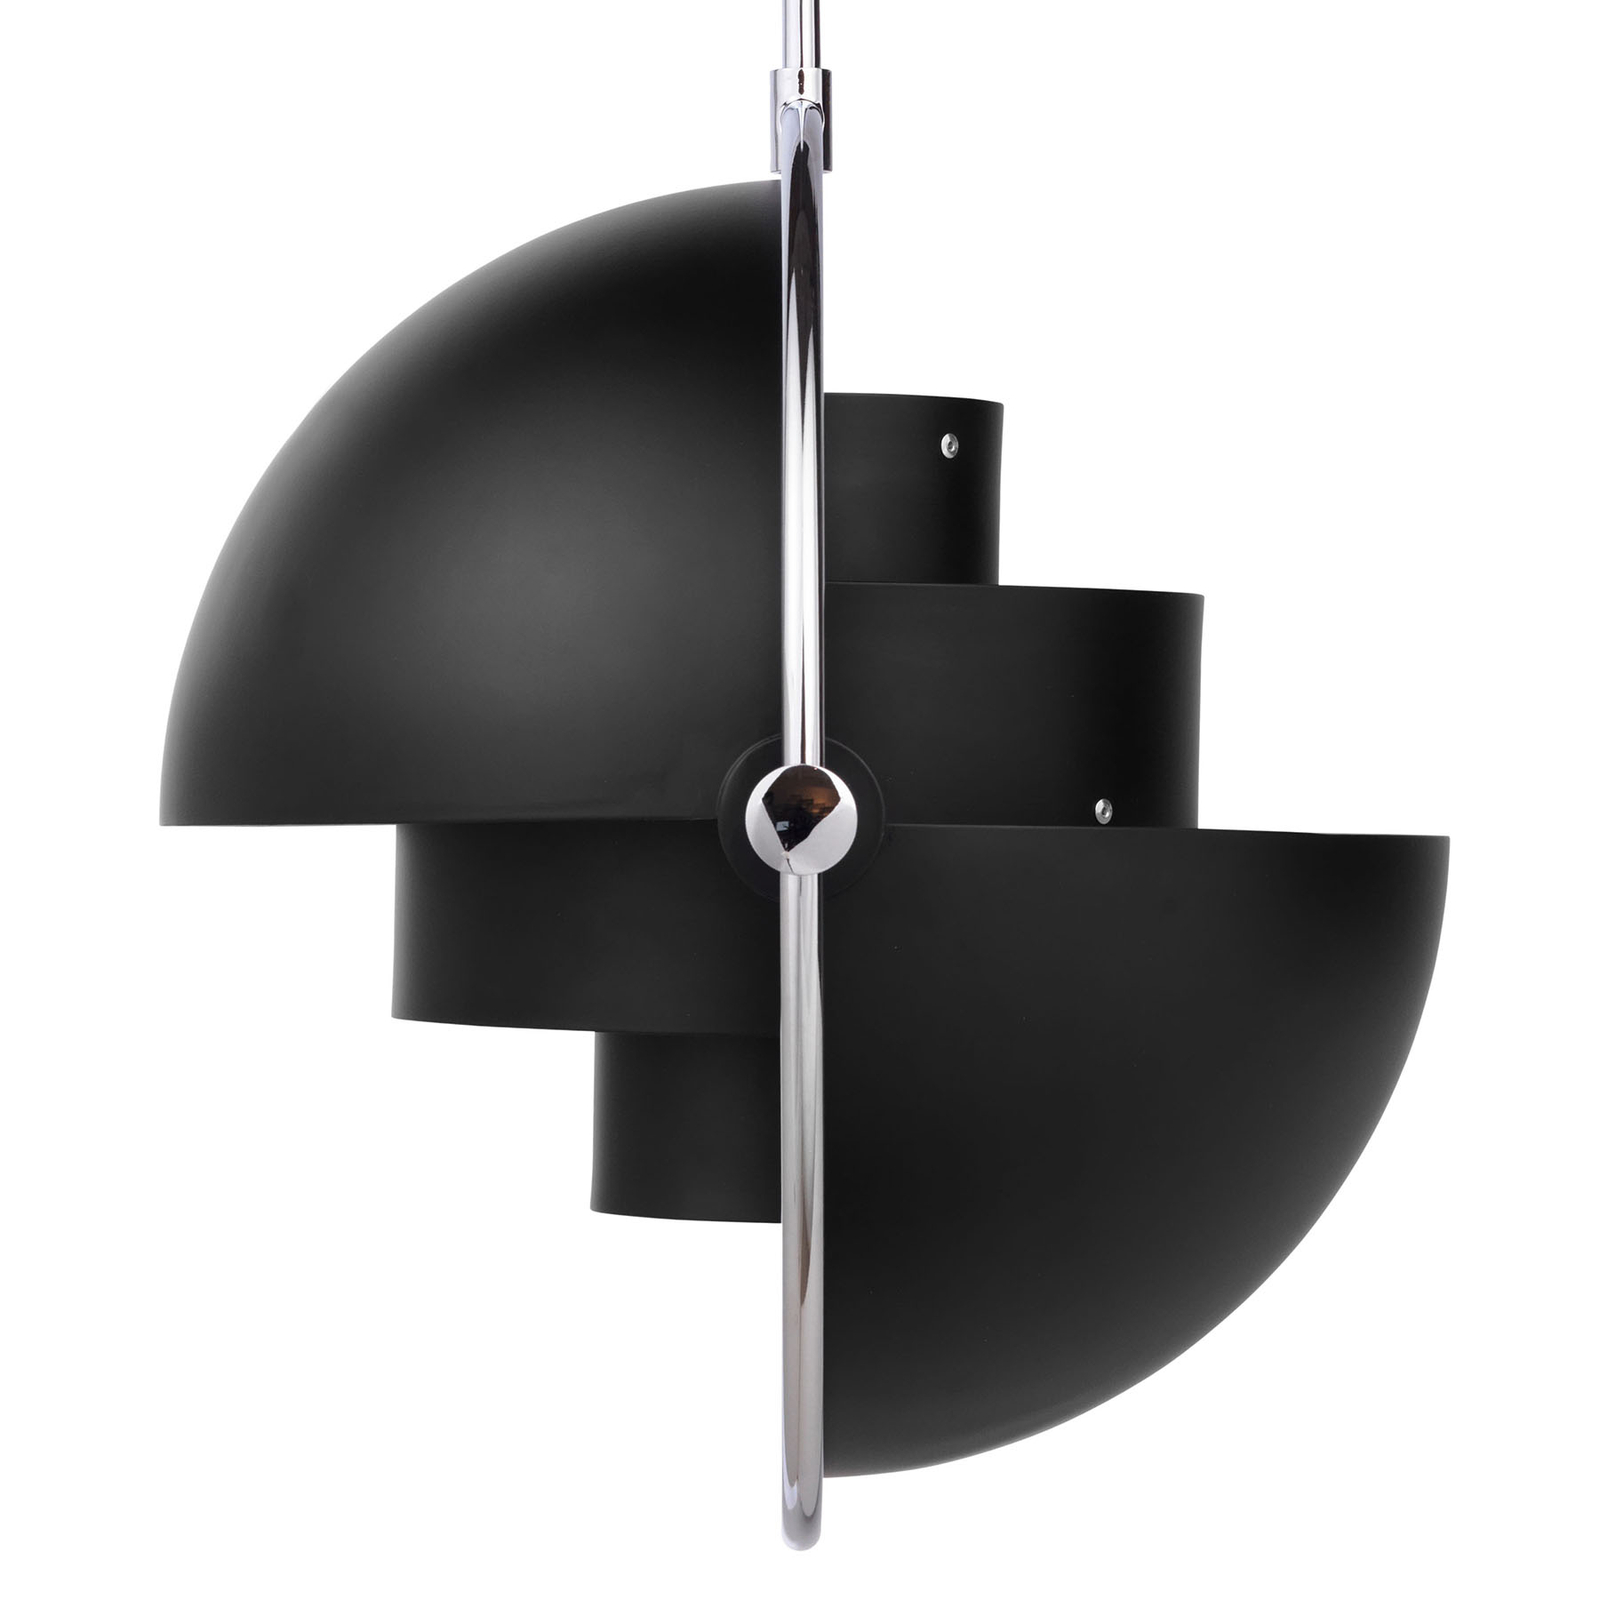 Gubi lampada a sospensione Lite, Ø 36 cm, cromo/nero